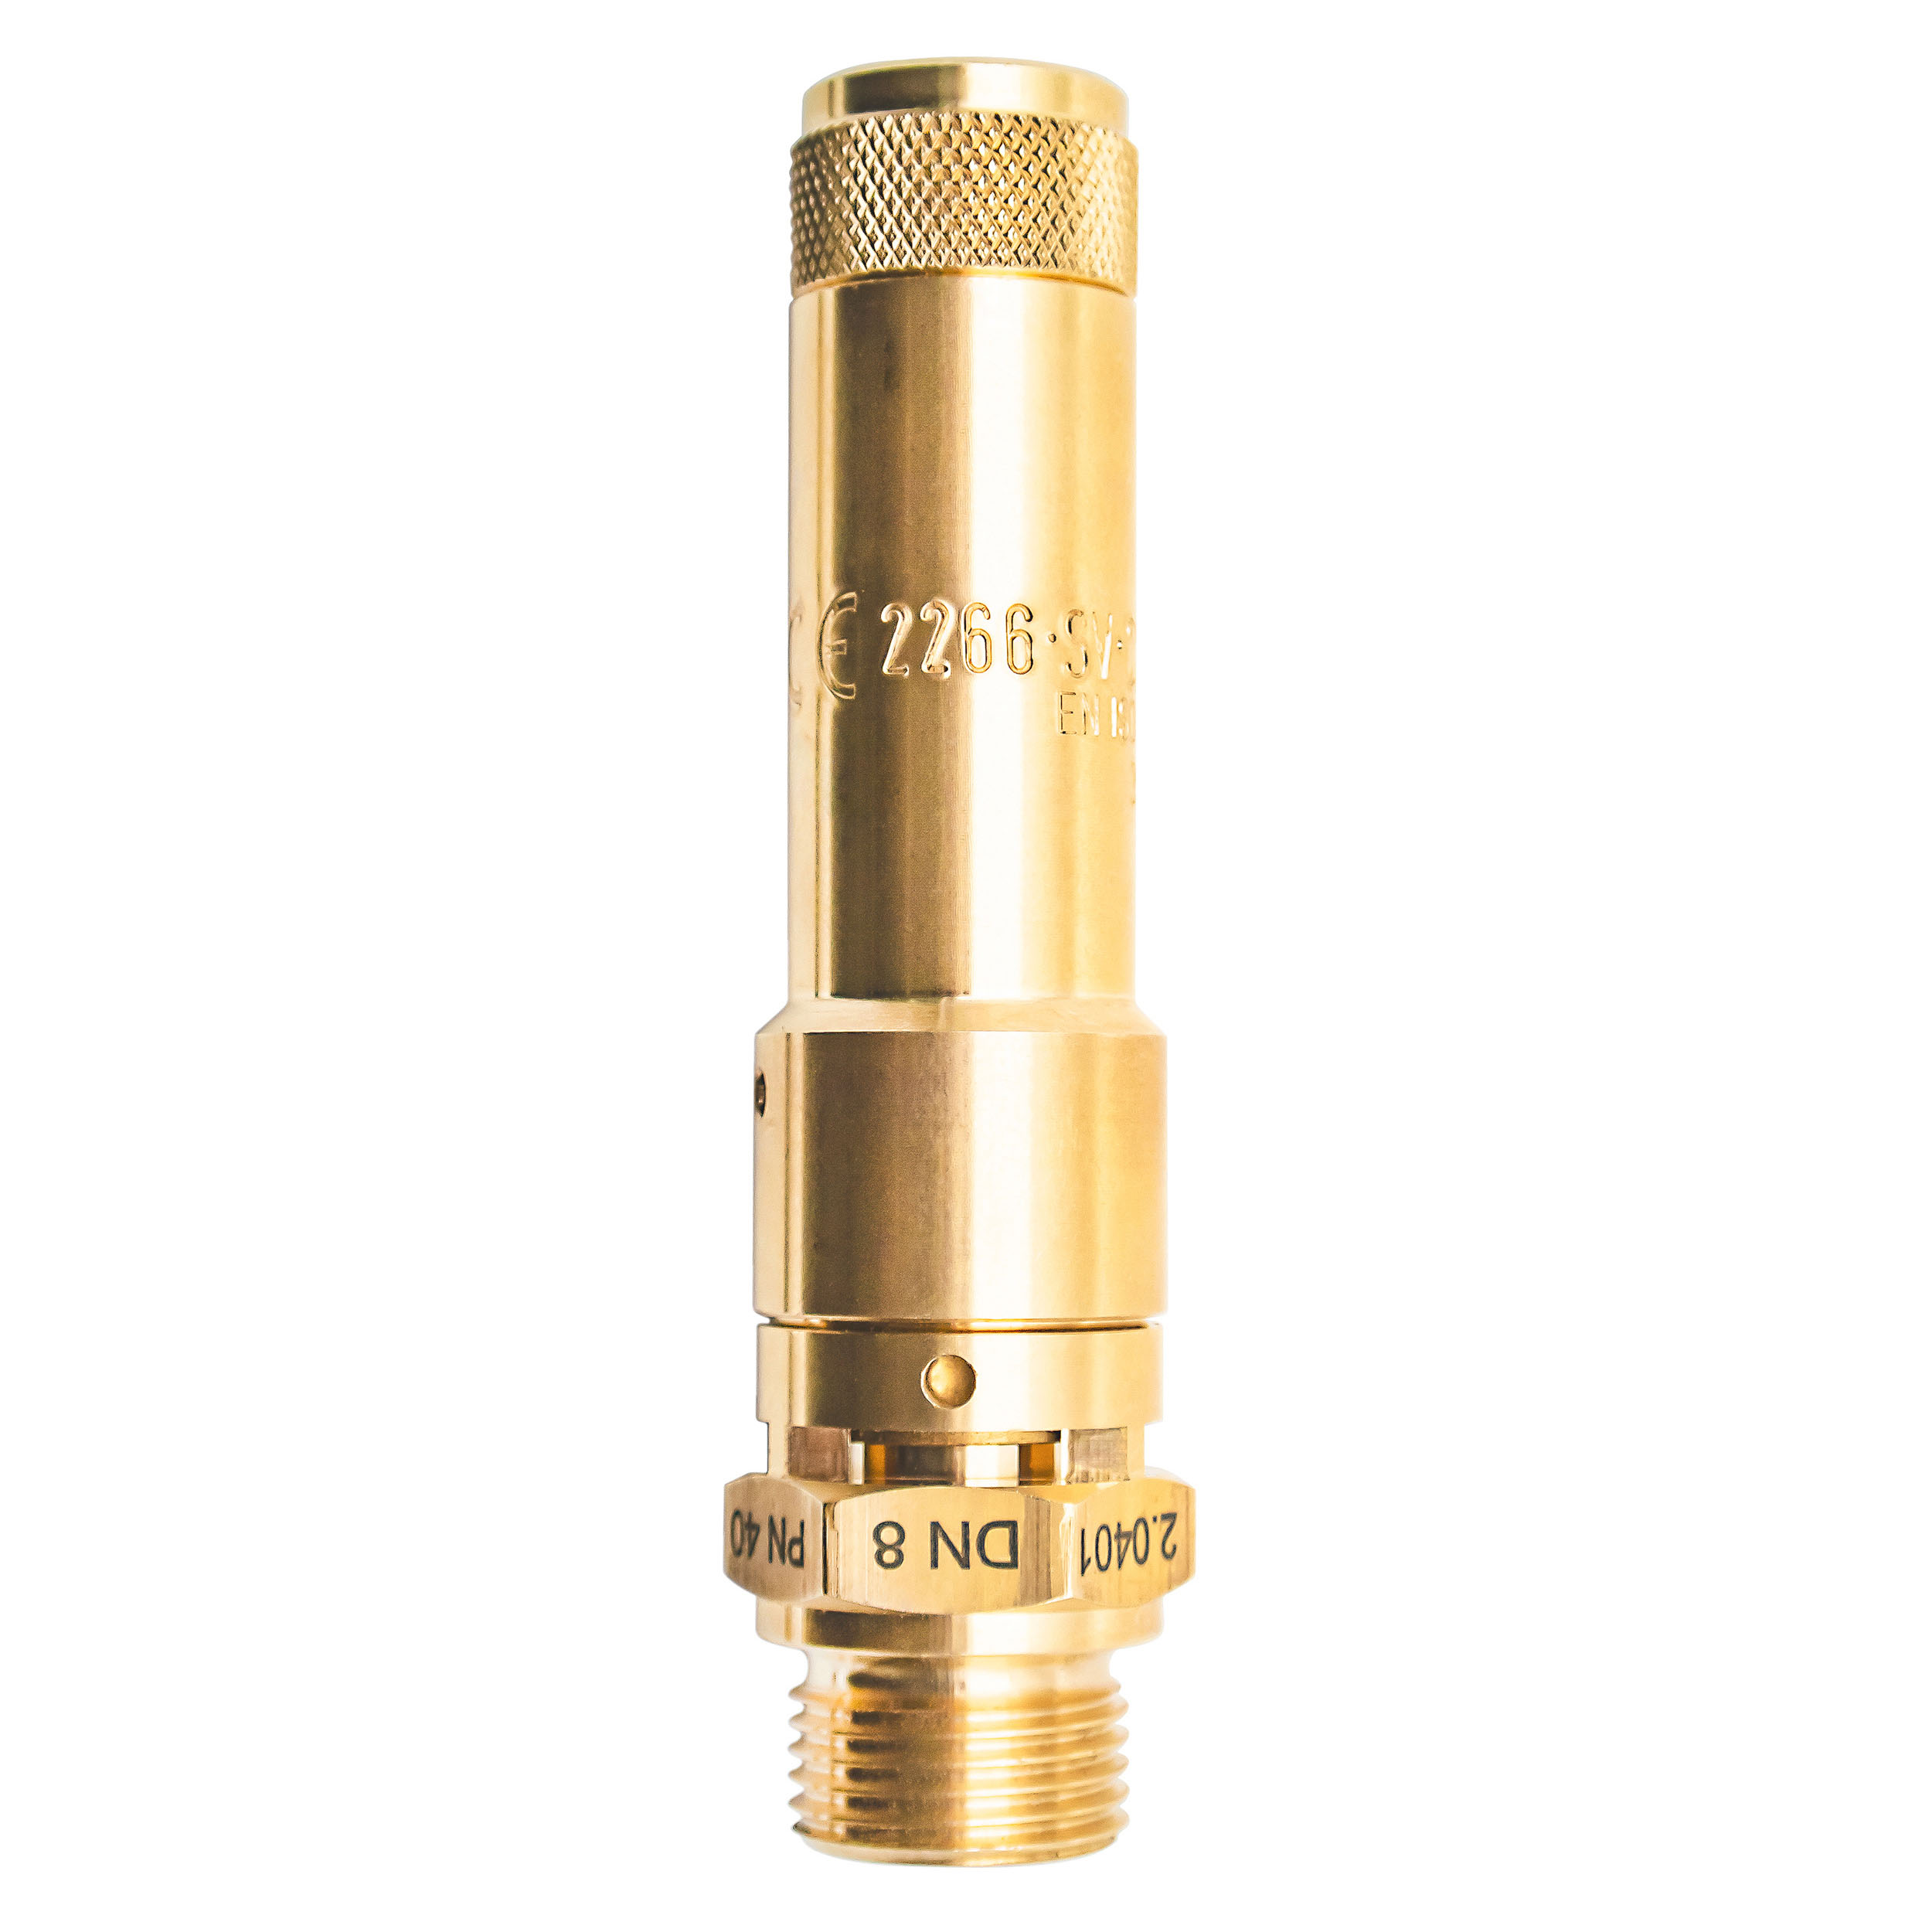 Component-tested safety valve DN 8, G⅜, pressure: 15.1-20 bar